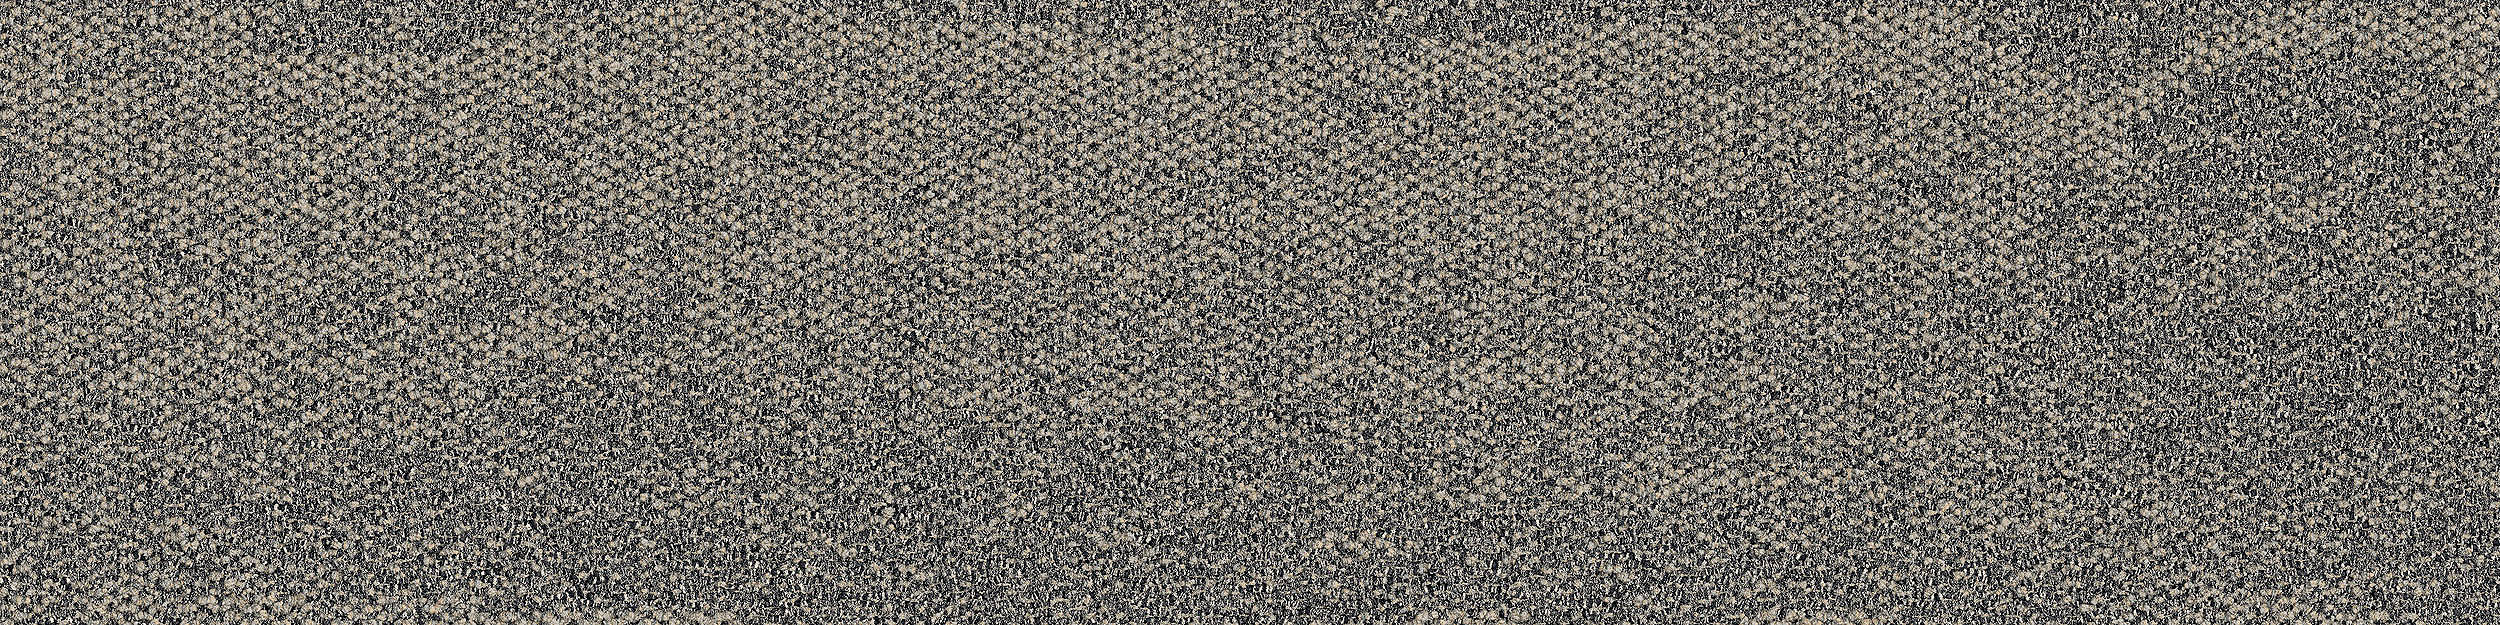 Mesa Carpet Tile in Fog imagen número 10